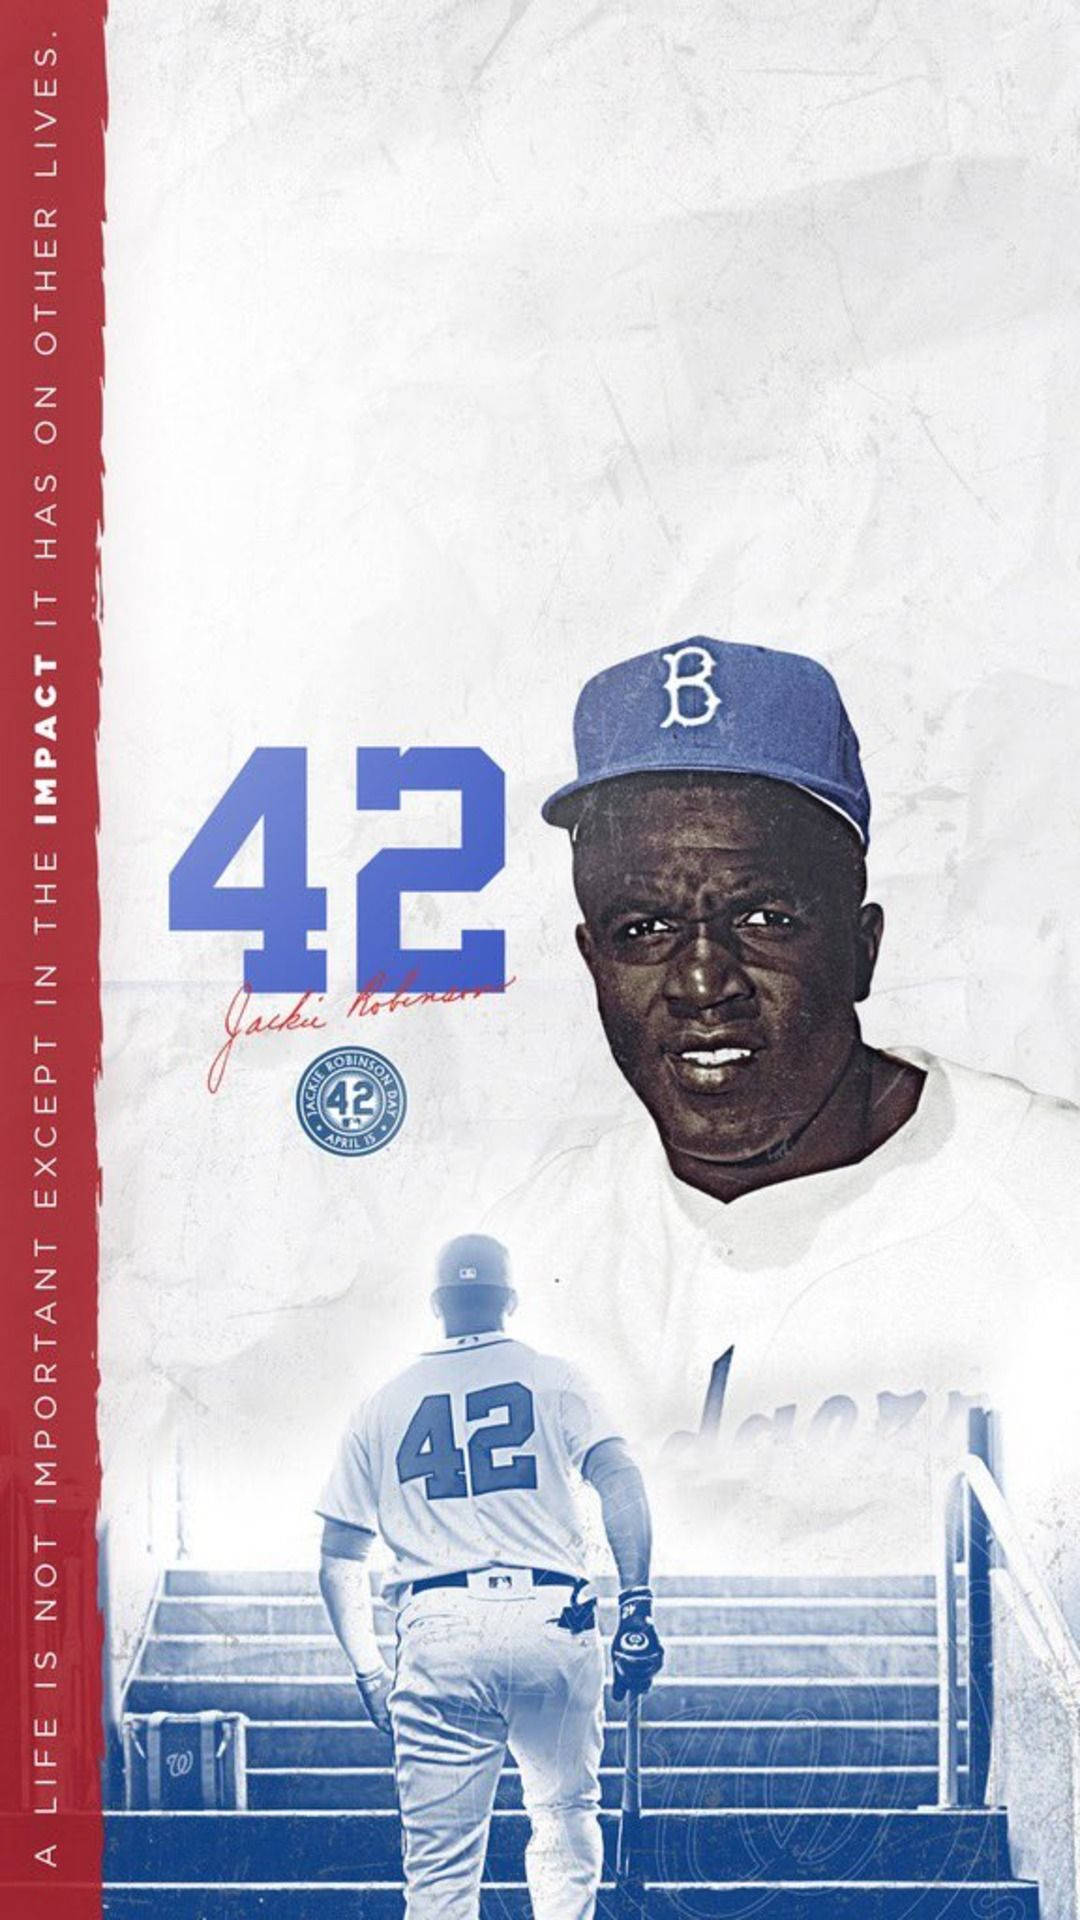 Jackie Robinson MLB Player Wallpaper